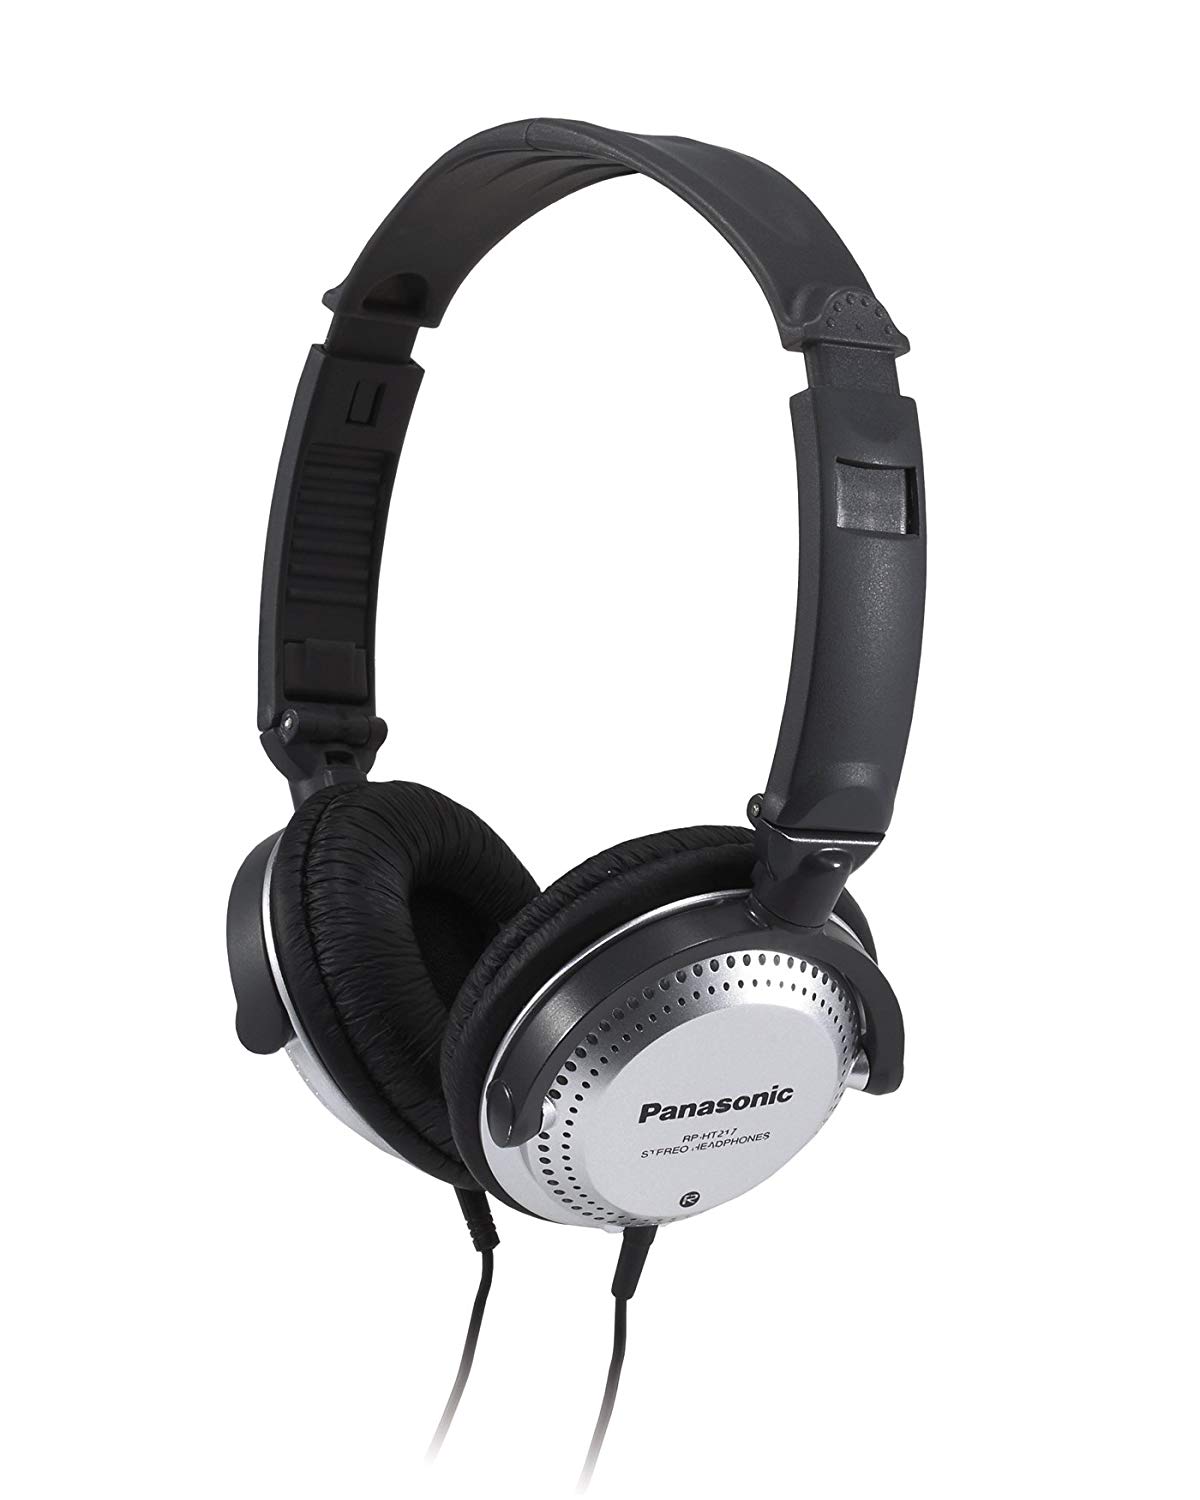 Panasonic over-ear headphones